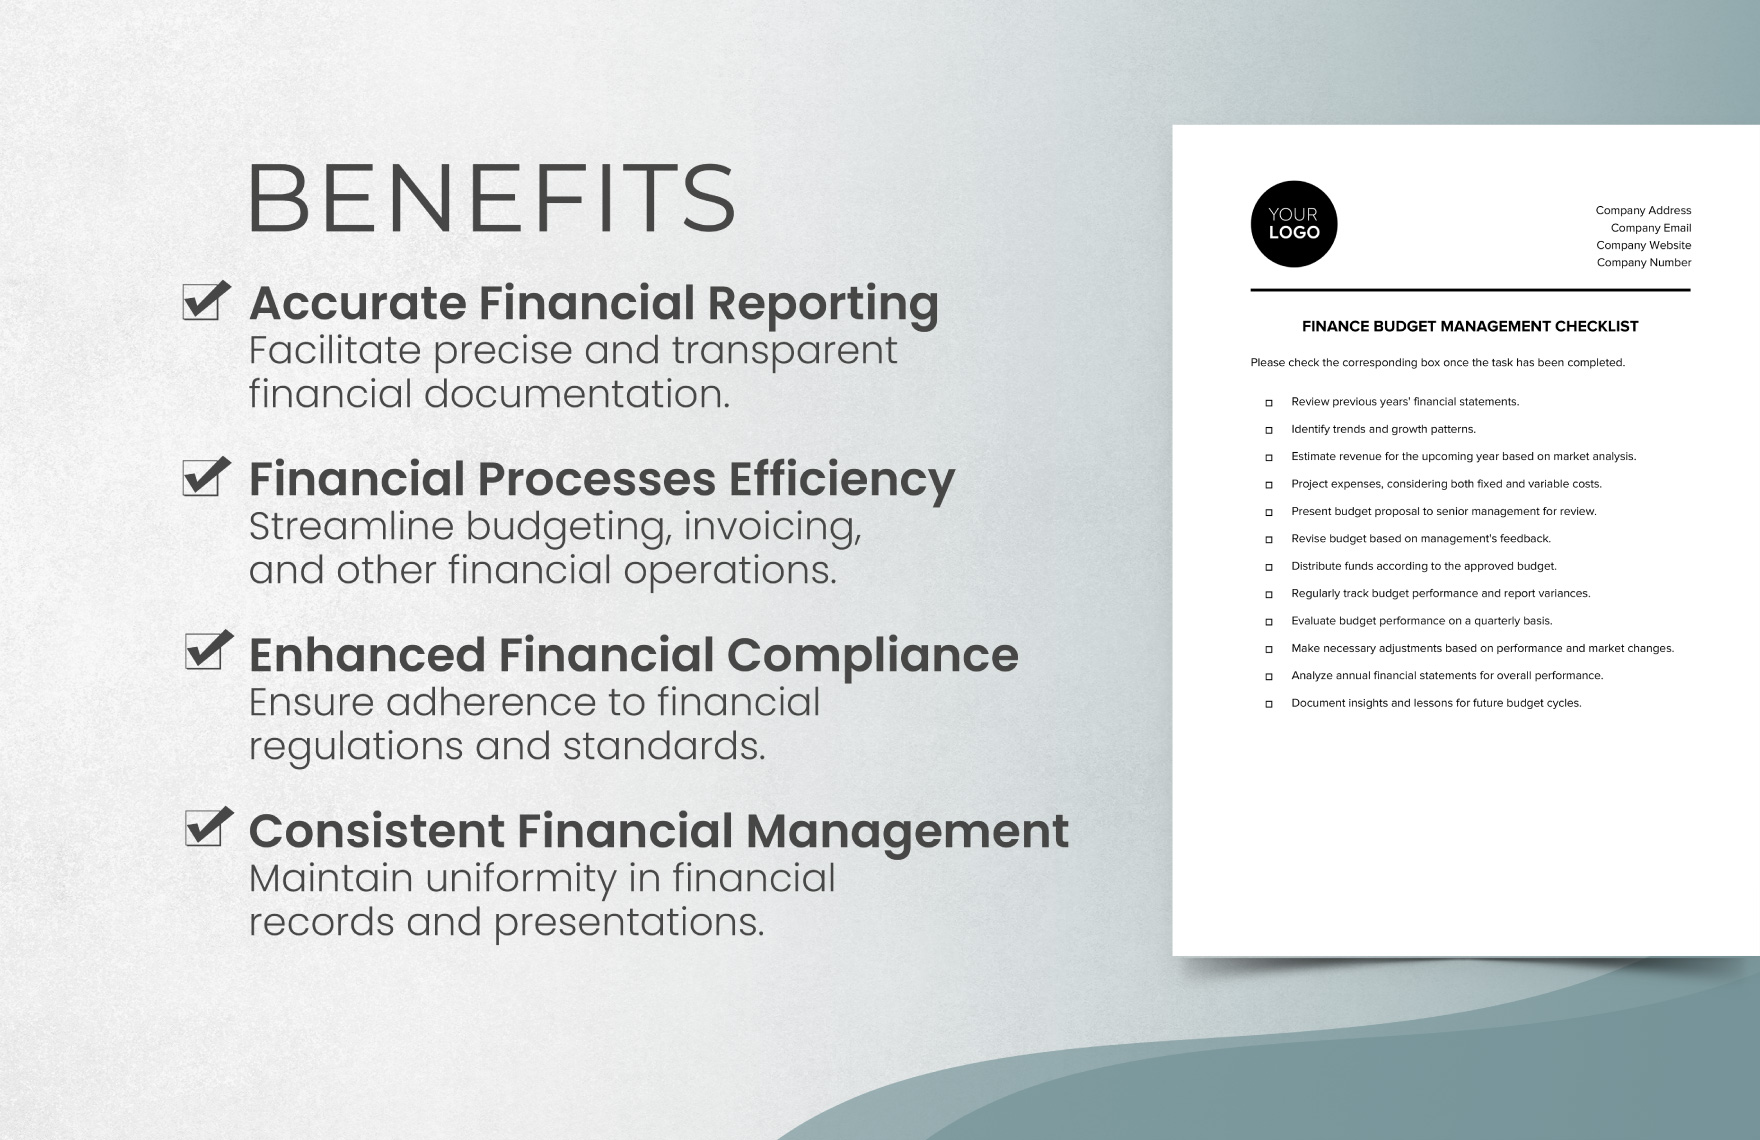 Finance Budget Management Checklist Template